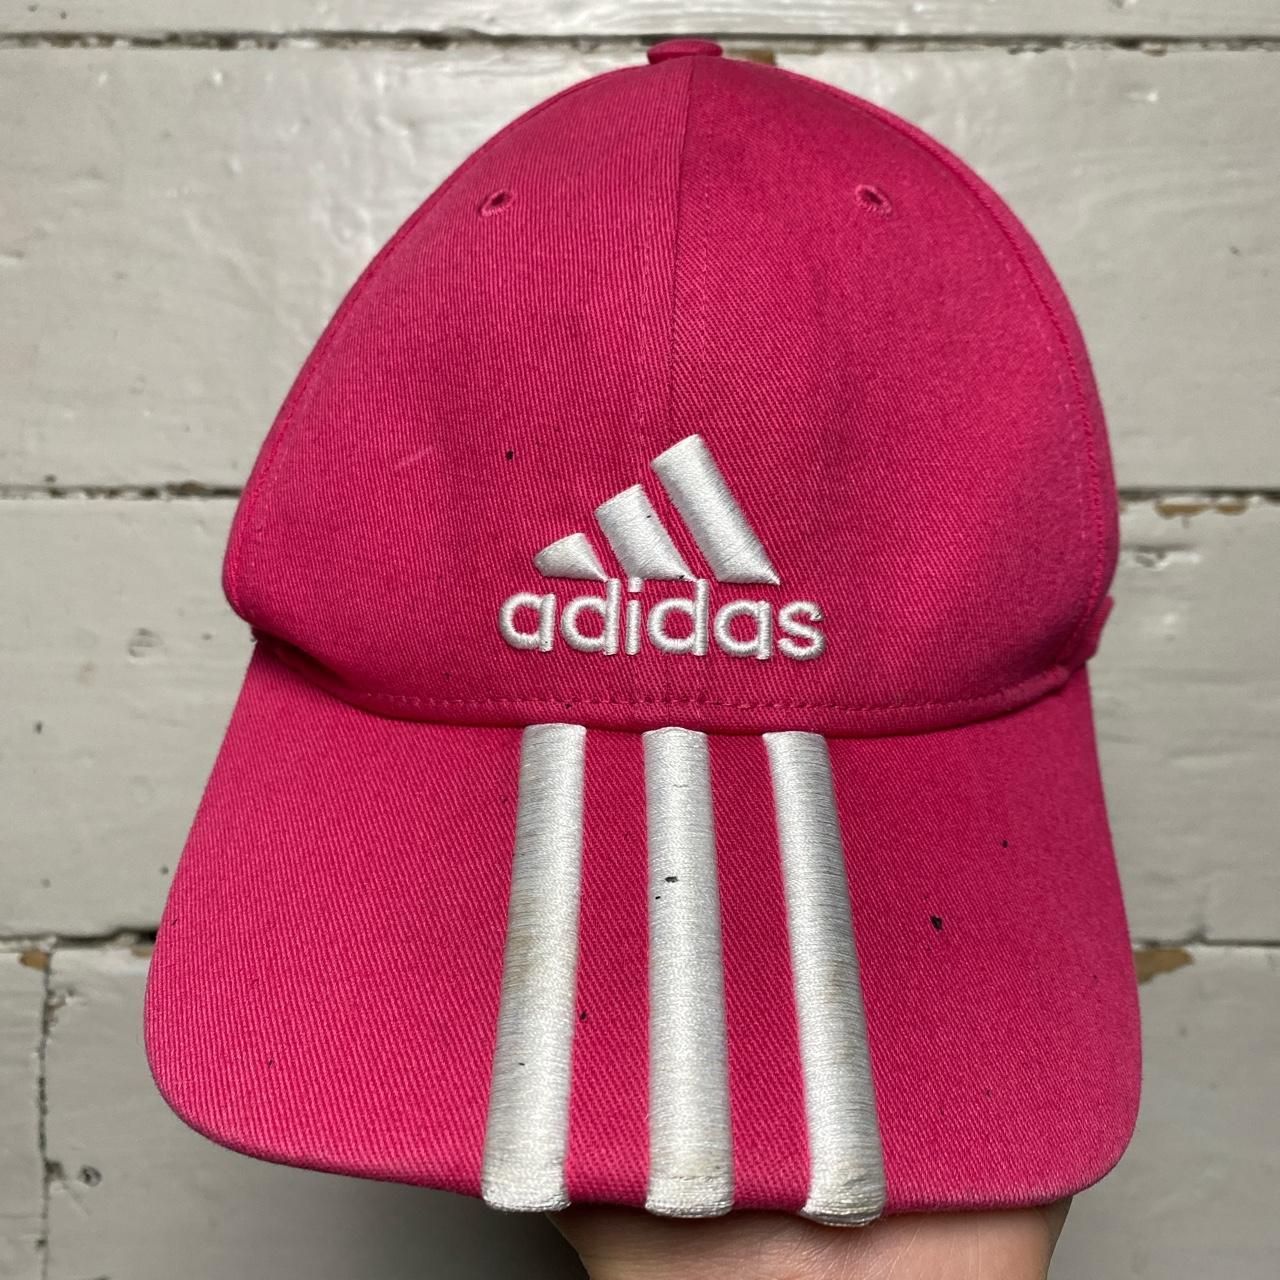 Adidas Pink and White Stripe Cap